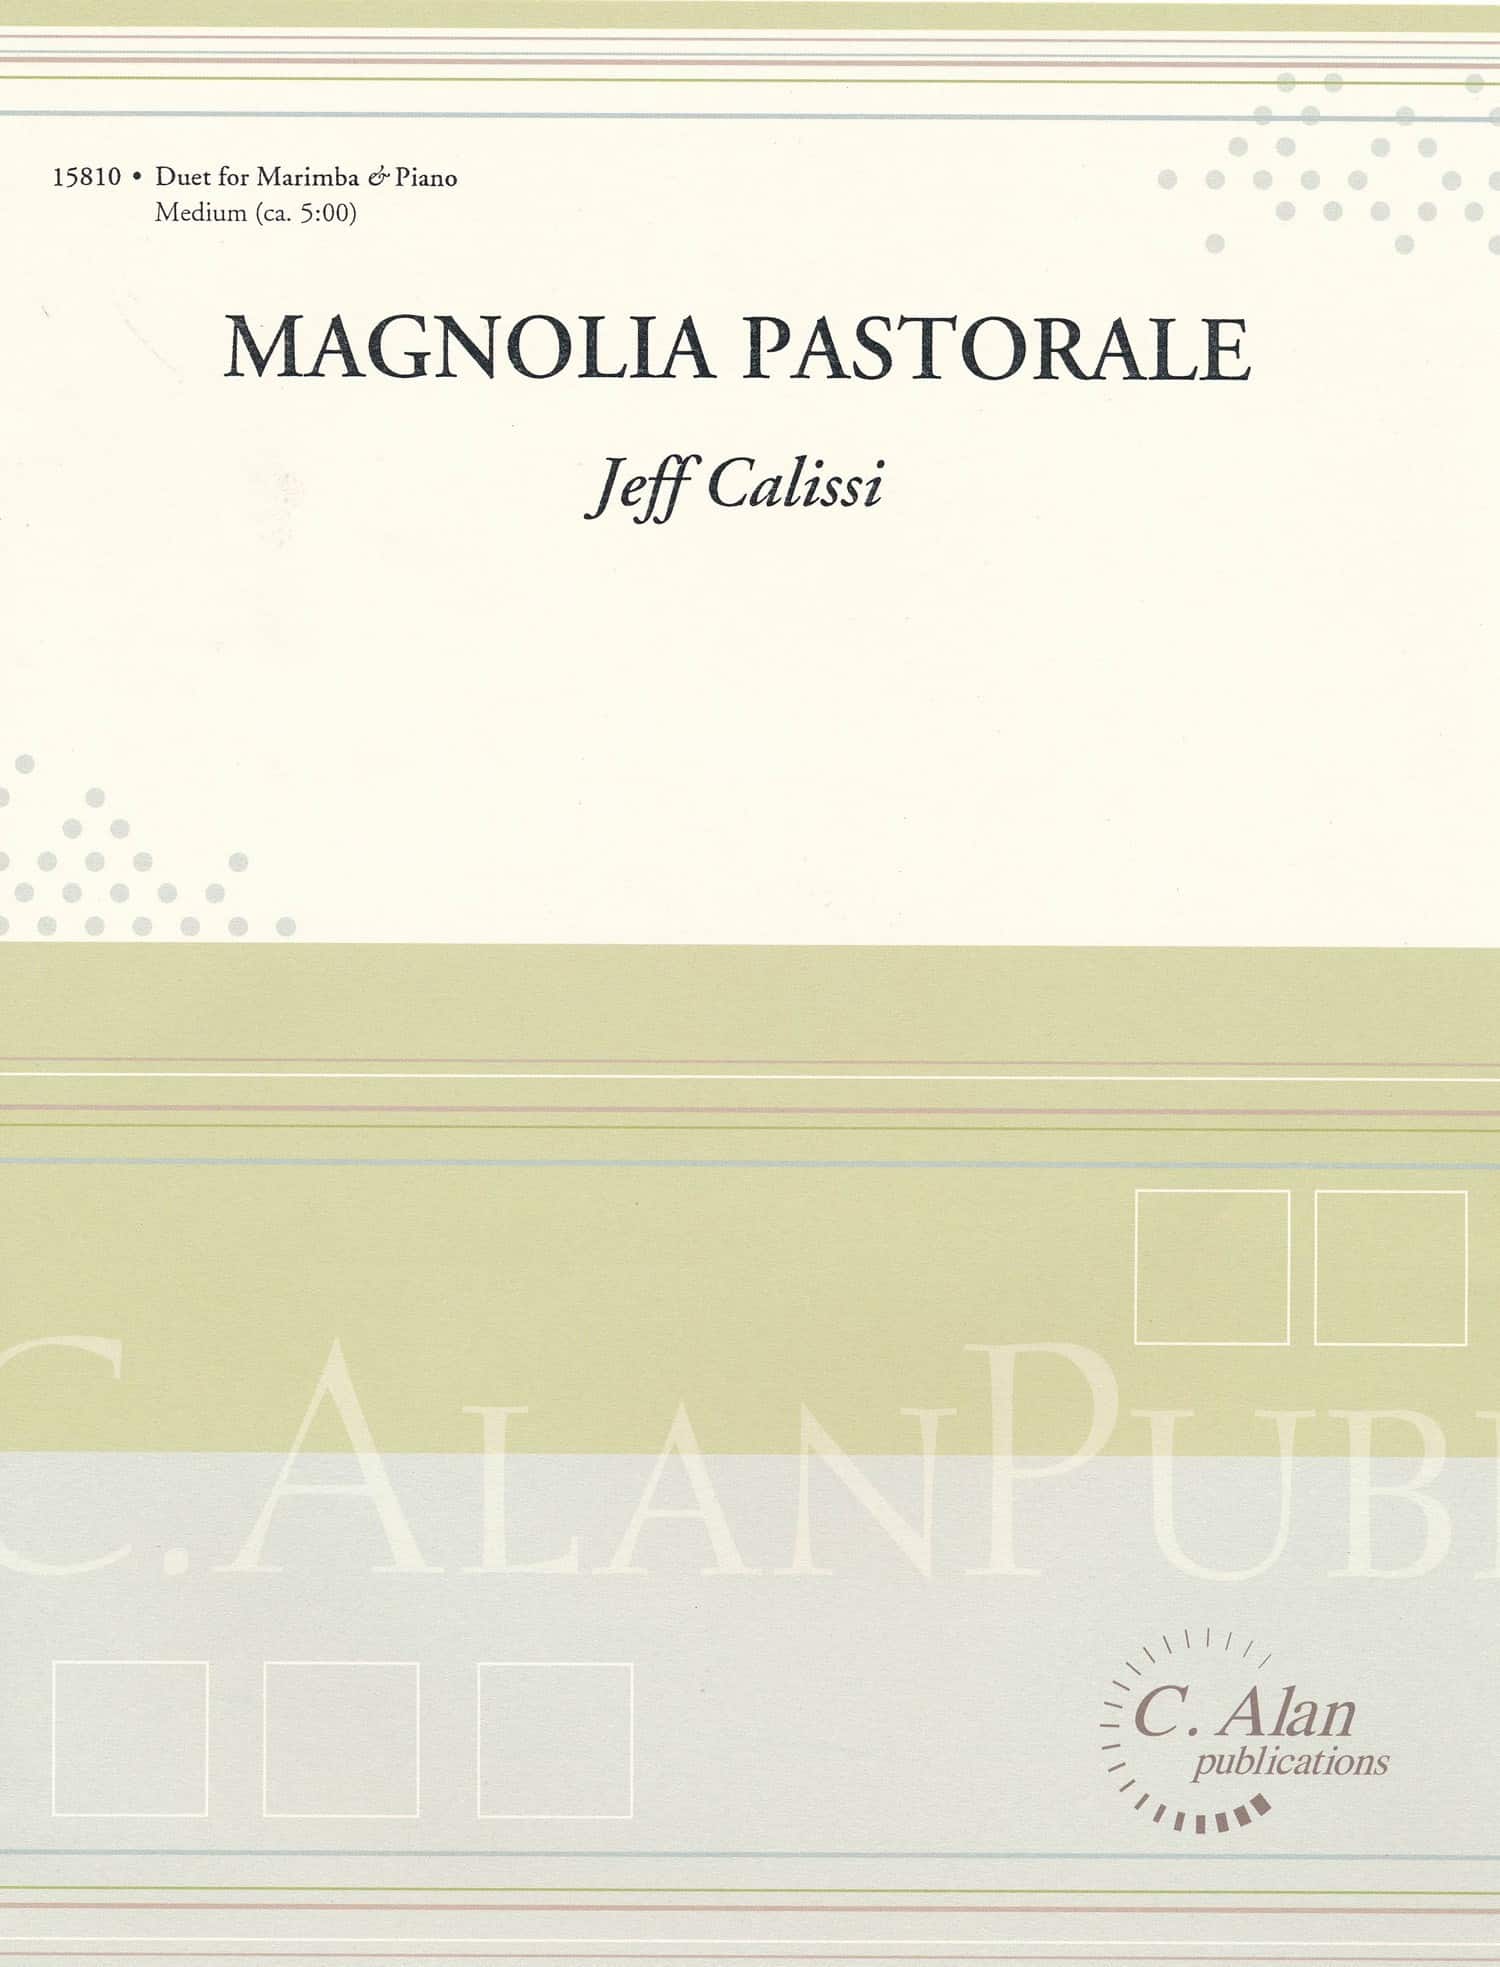 Magnolia Pastorale by Jeff Calissi